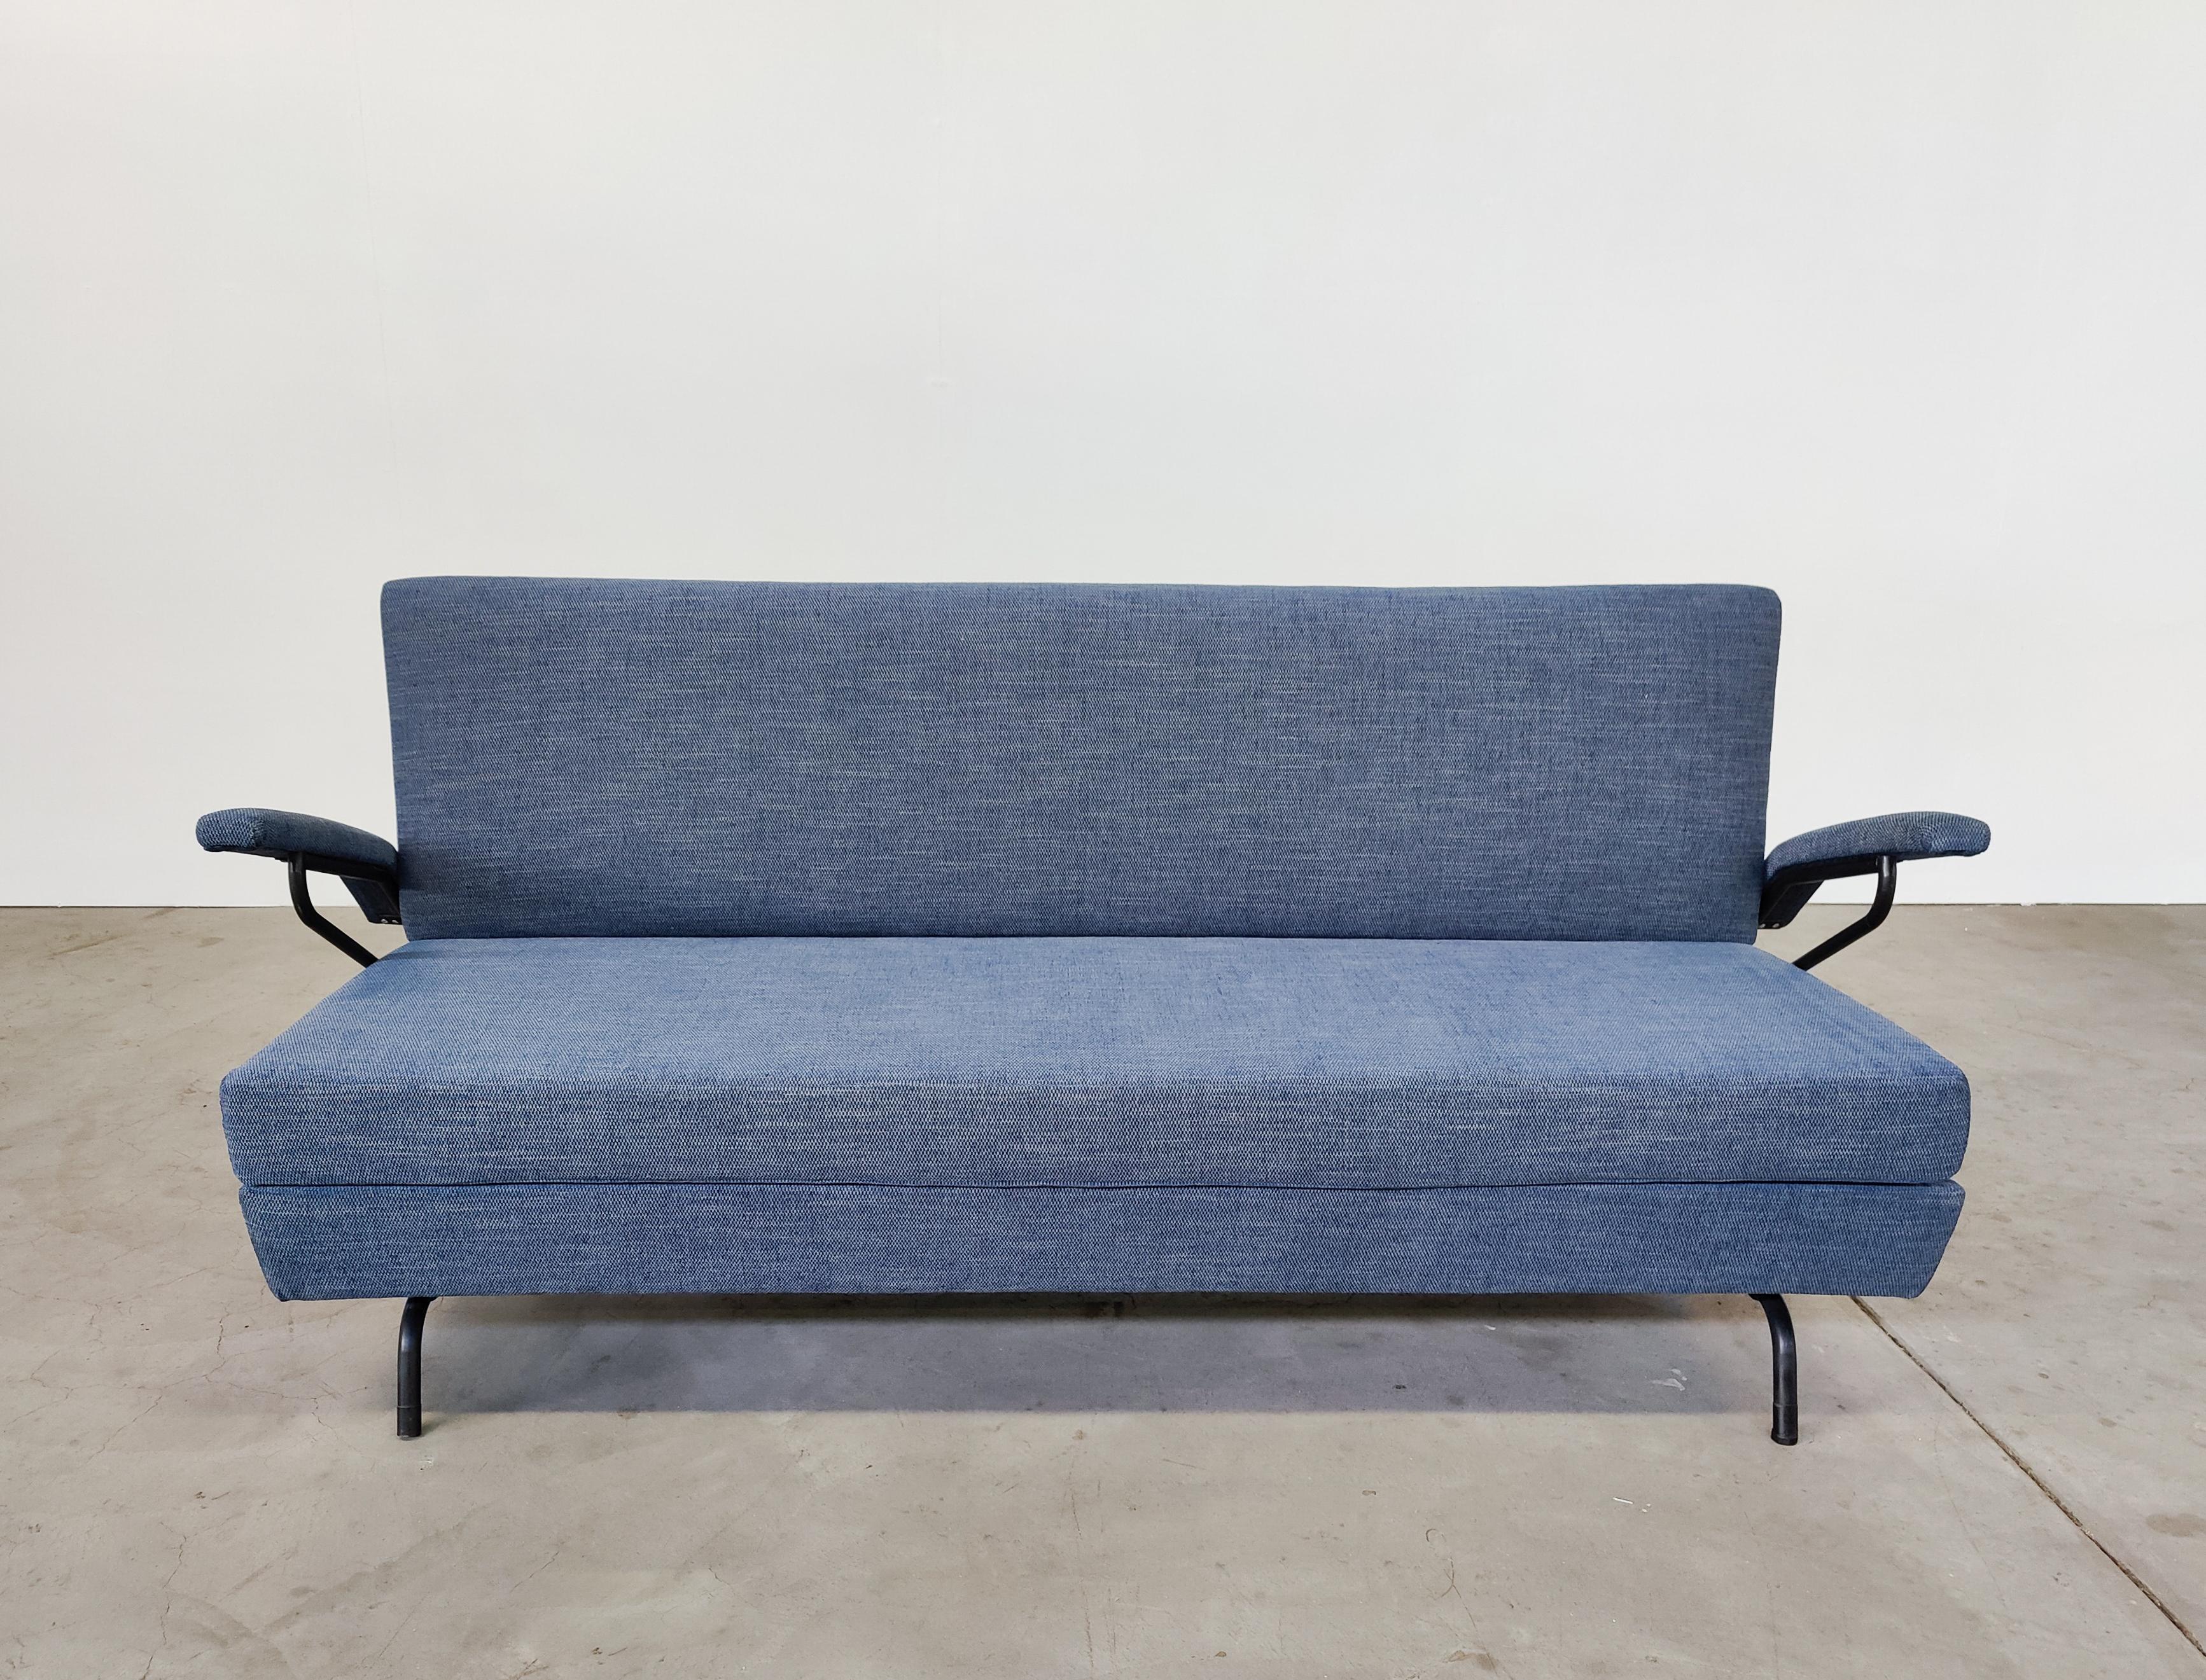 Mid-Century Modern Italian sofa bed, 1960s - new upholstery.